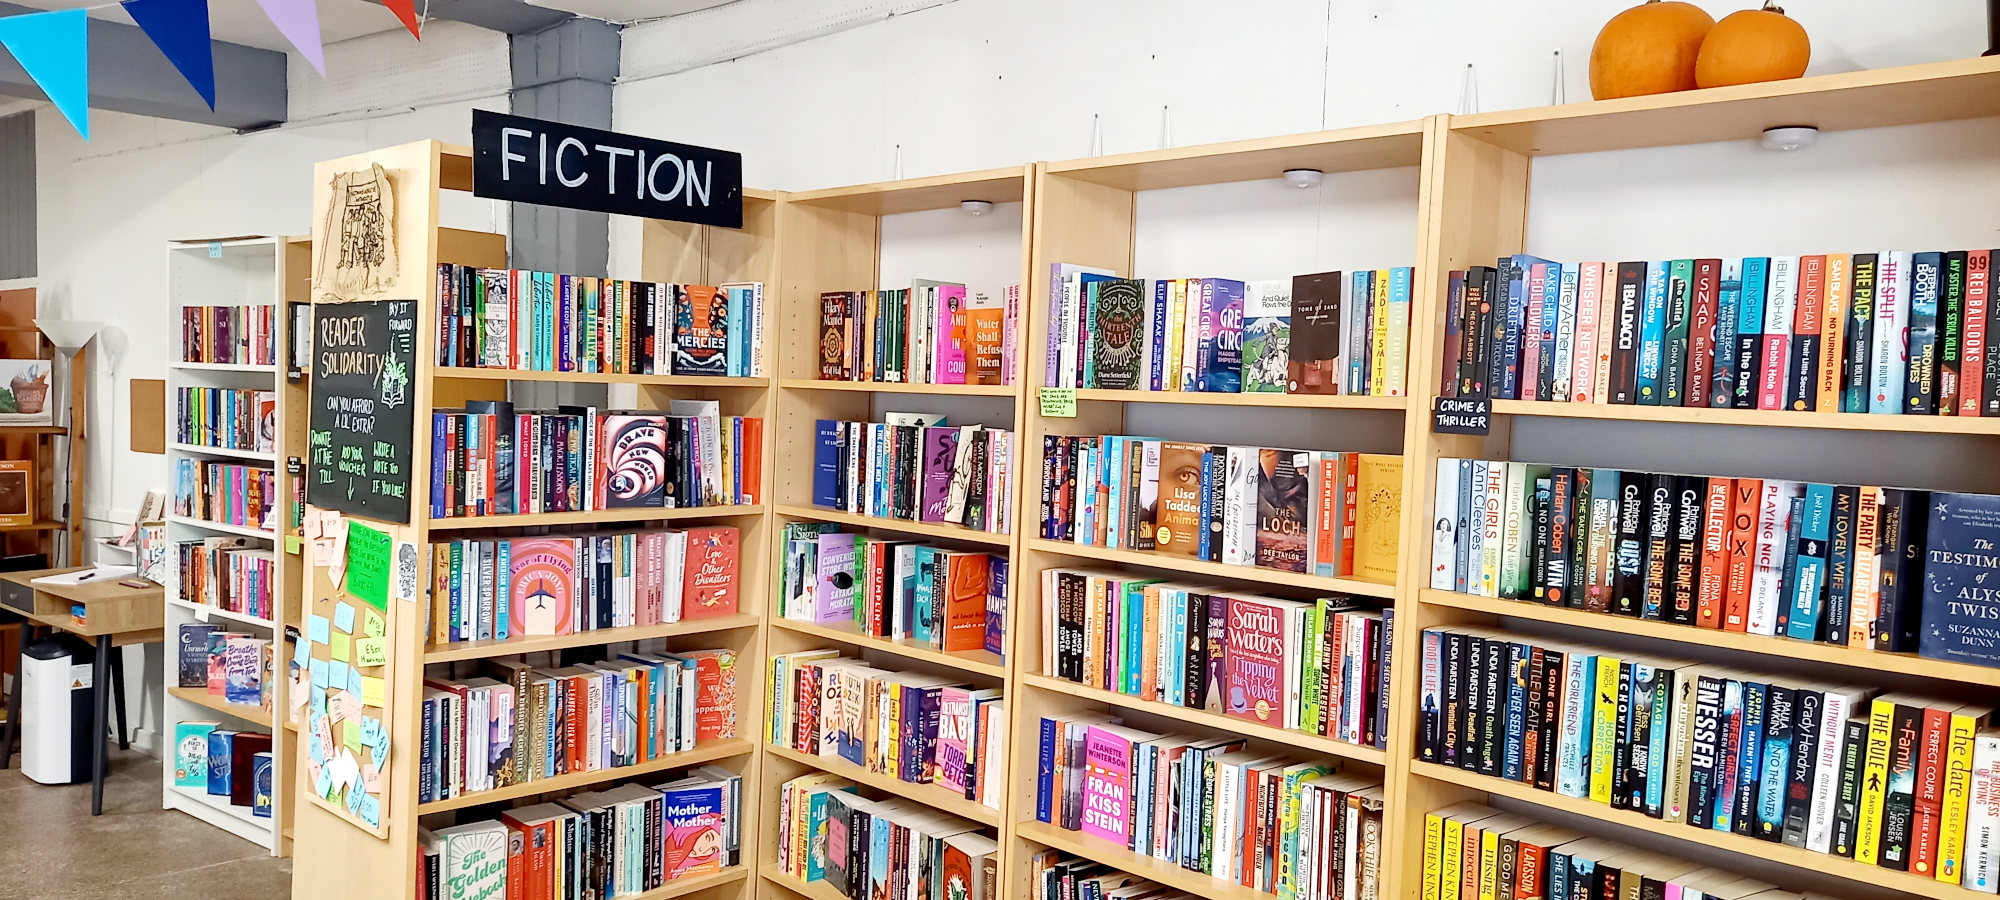 Fiction Shelves